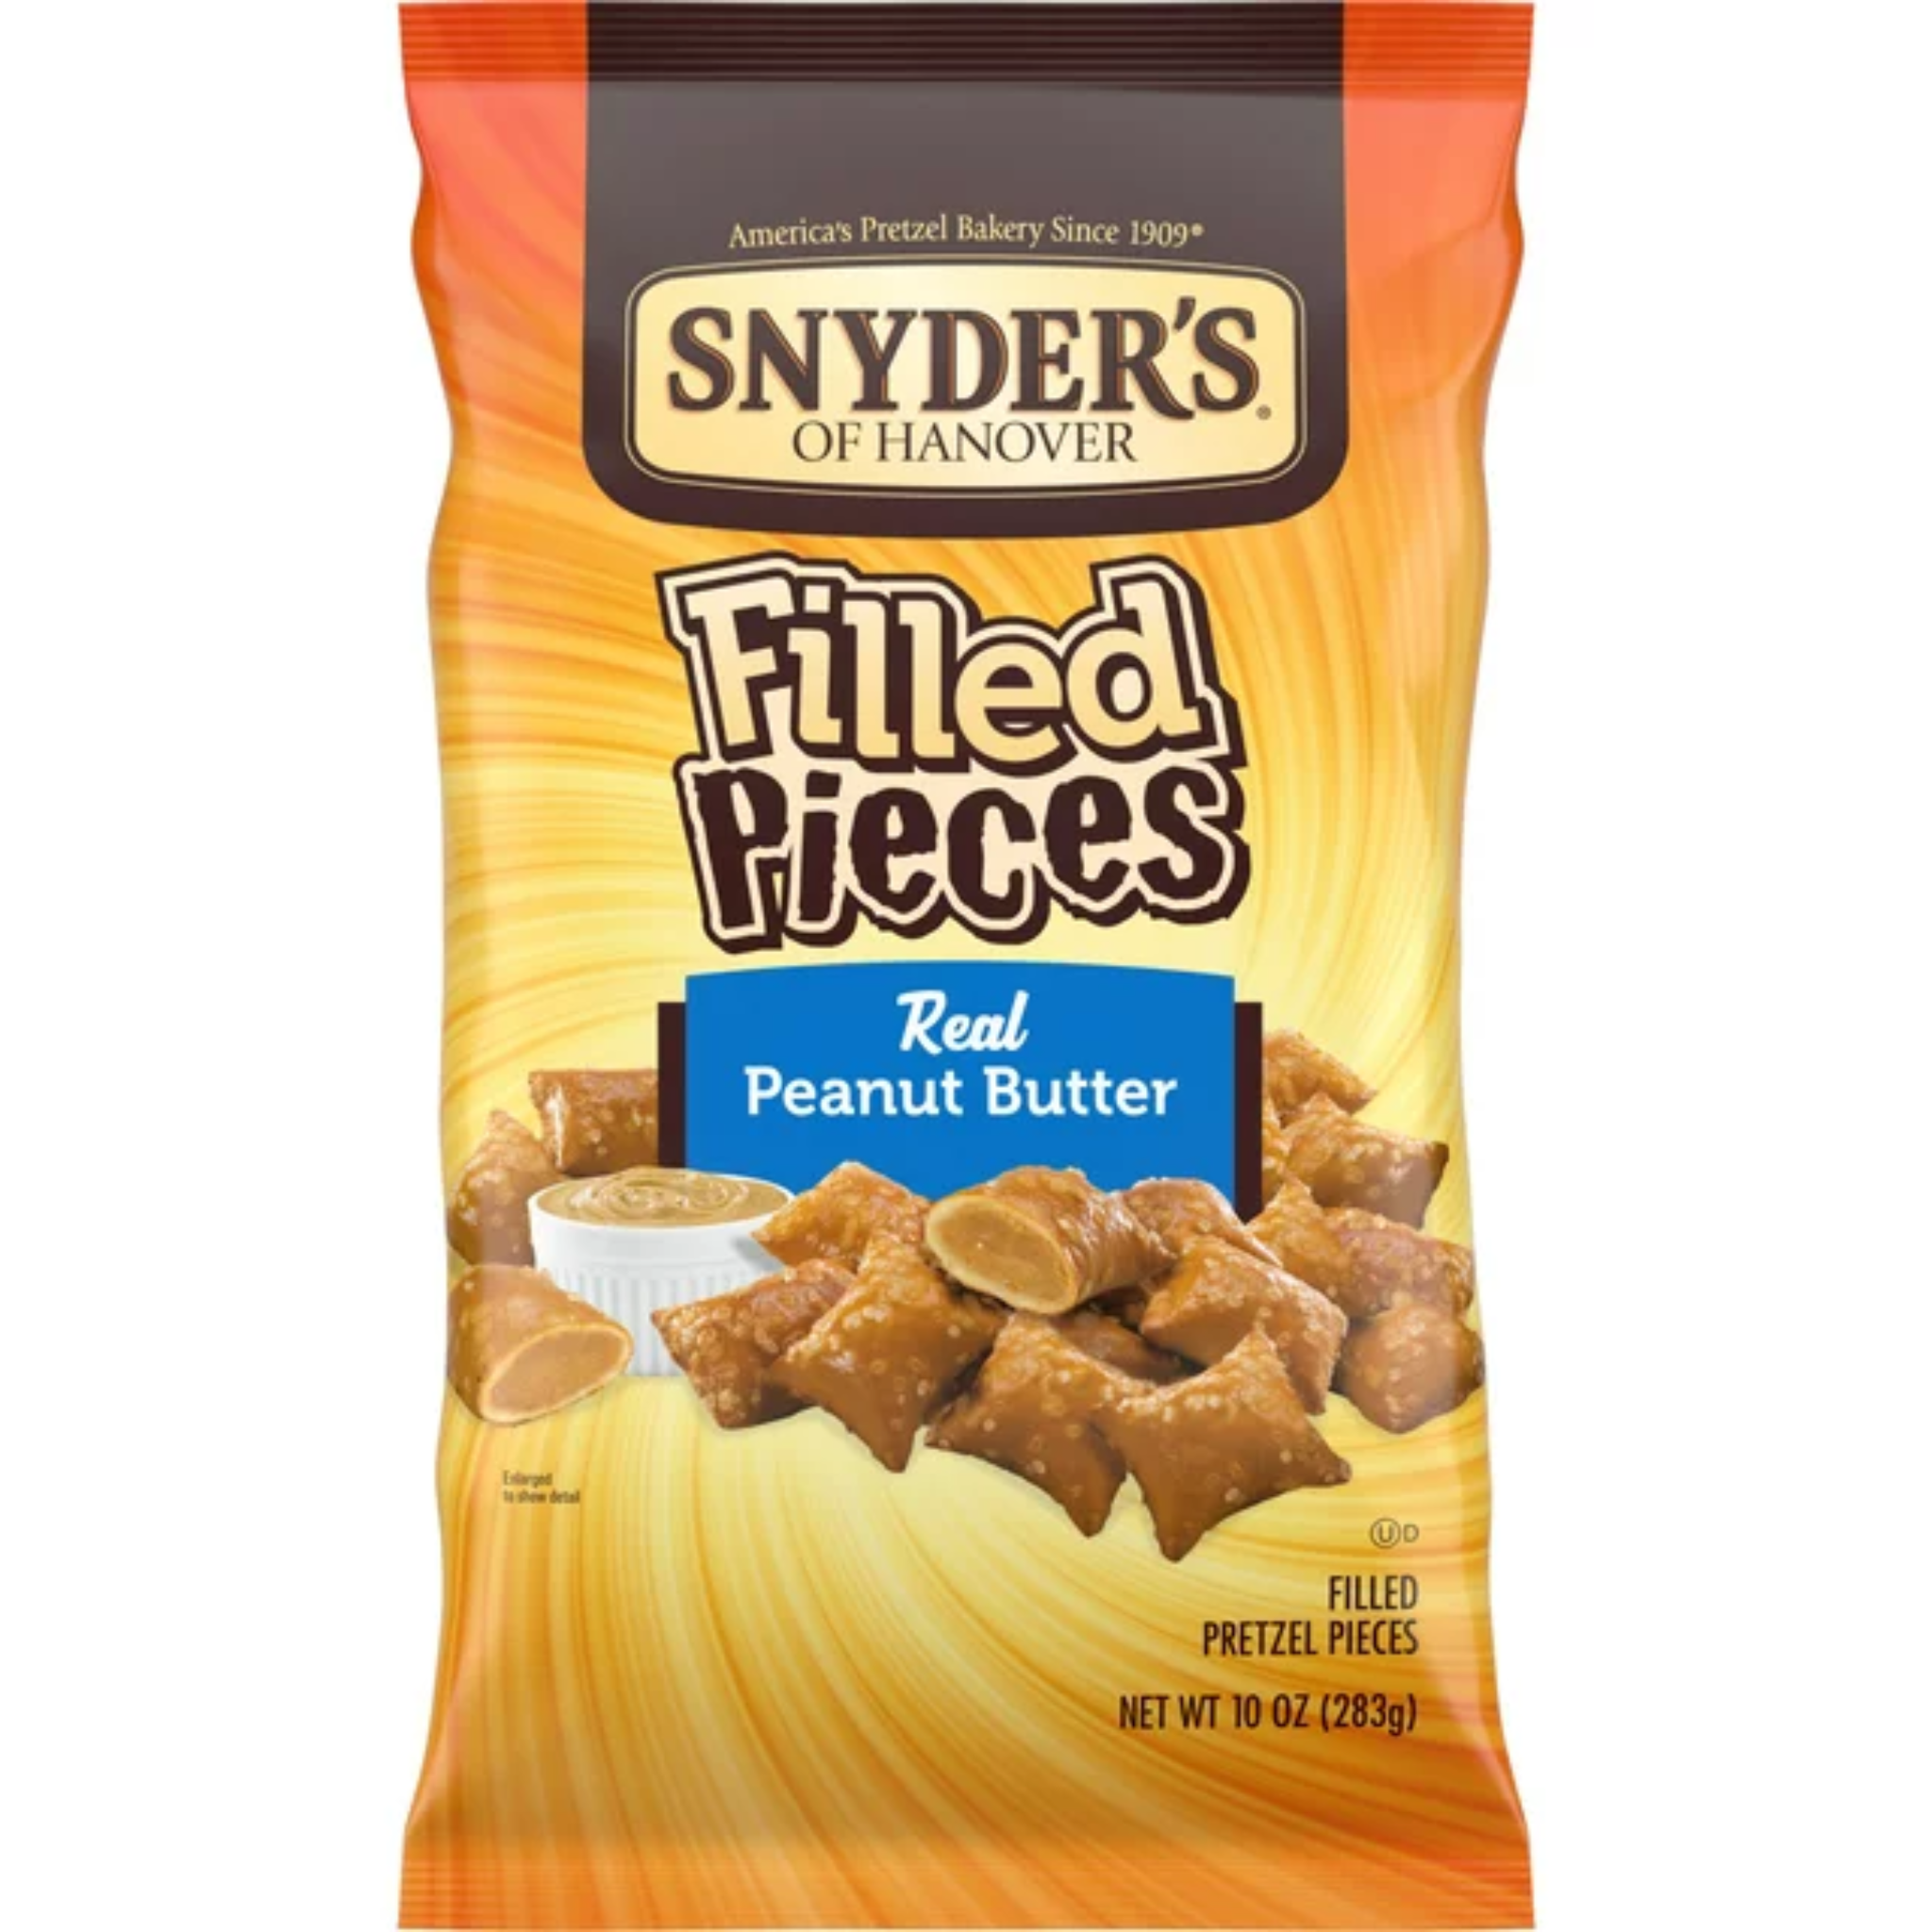 Snyder's Filled Pieces Peanut Butter 10oz